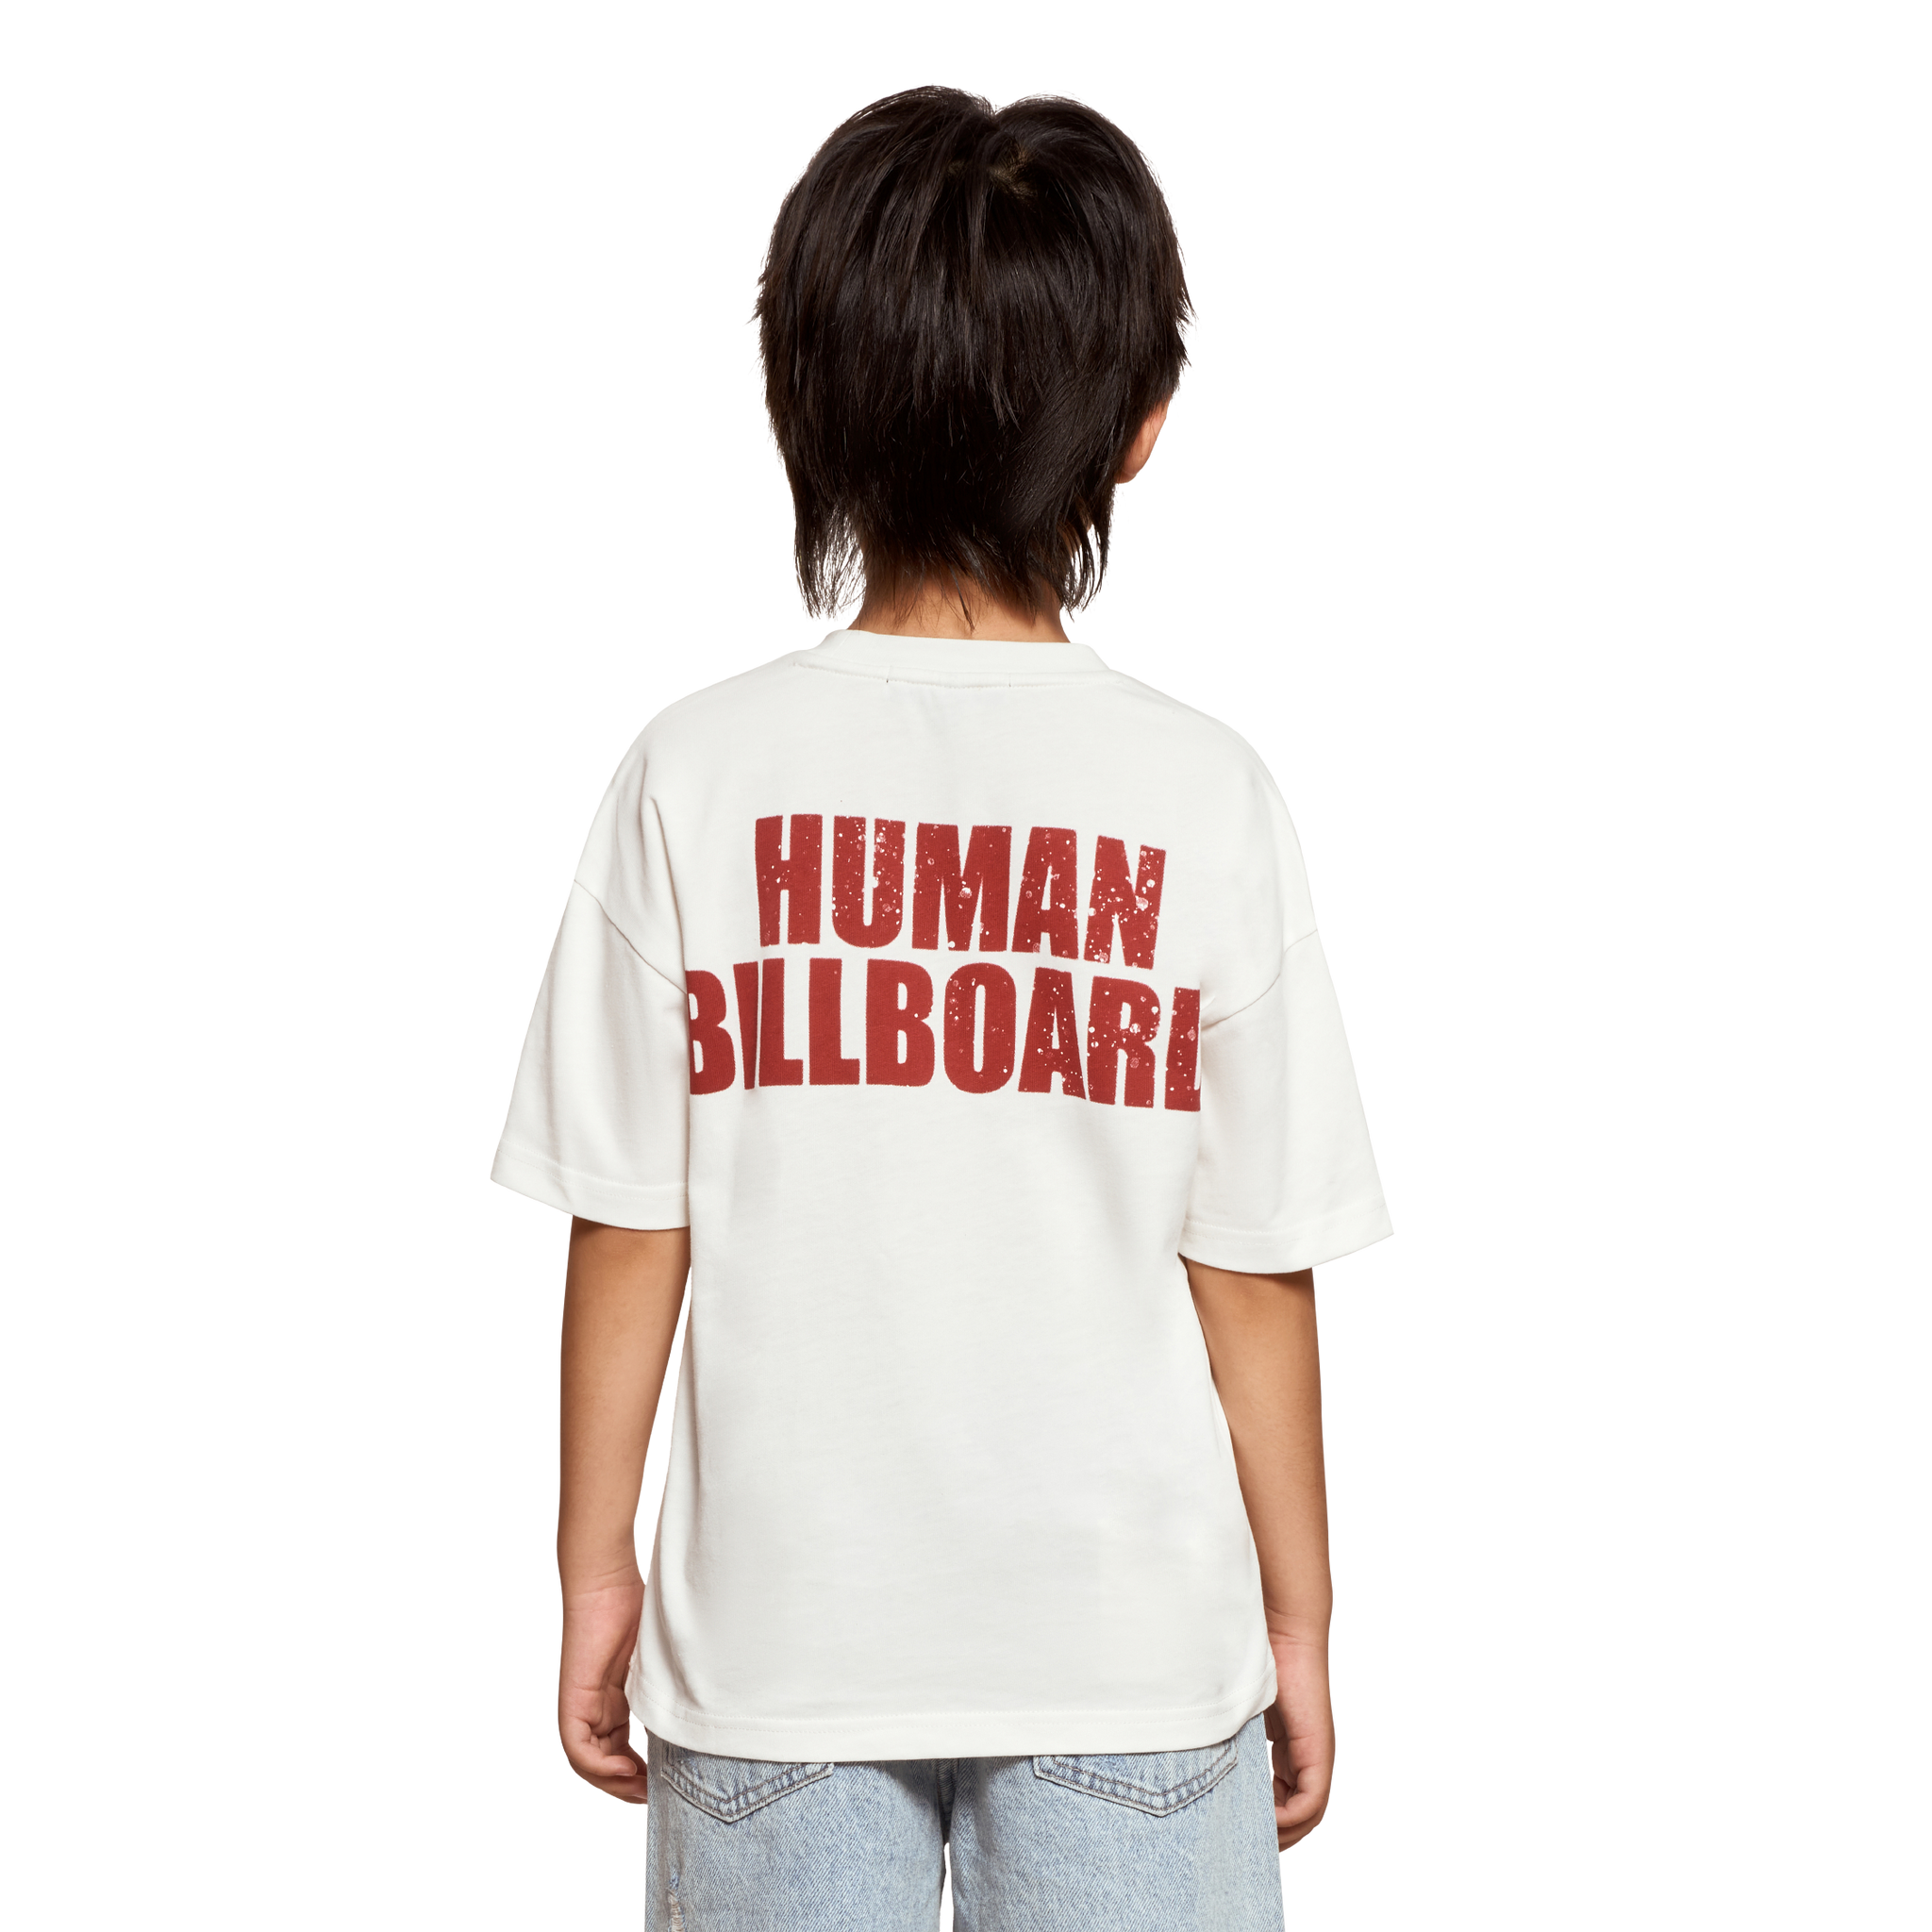 T-SHIRT Enfant HUMMAN BILLBOARD - BLANC